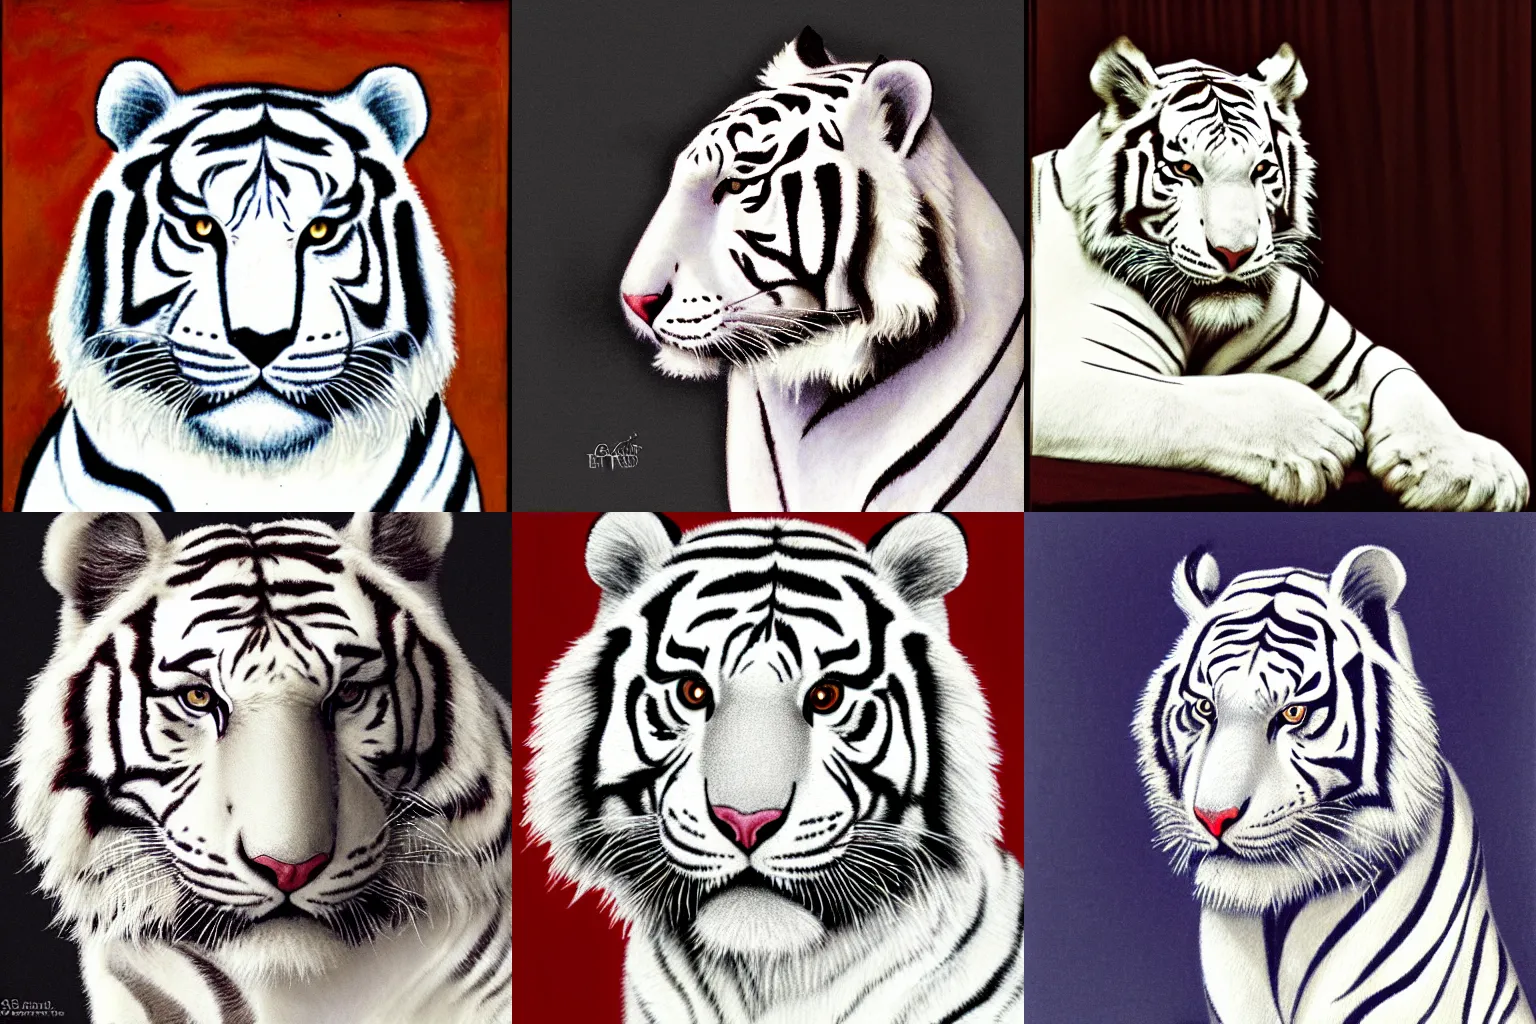 Prompt: shoshon the elegant the white tiger king, portrait